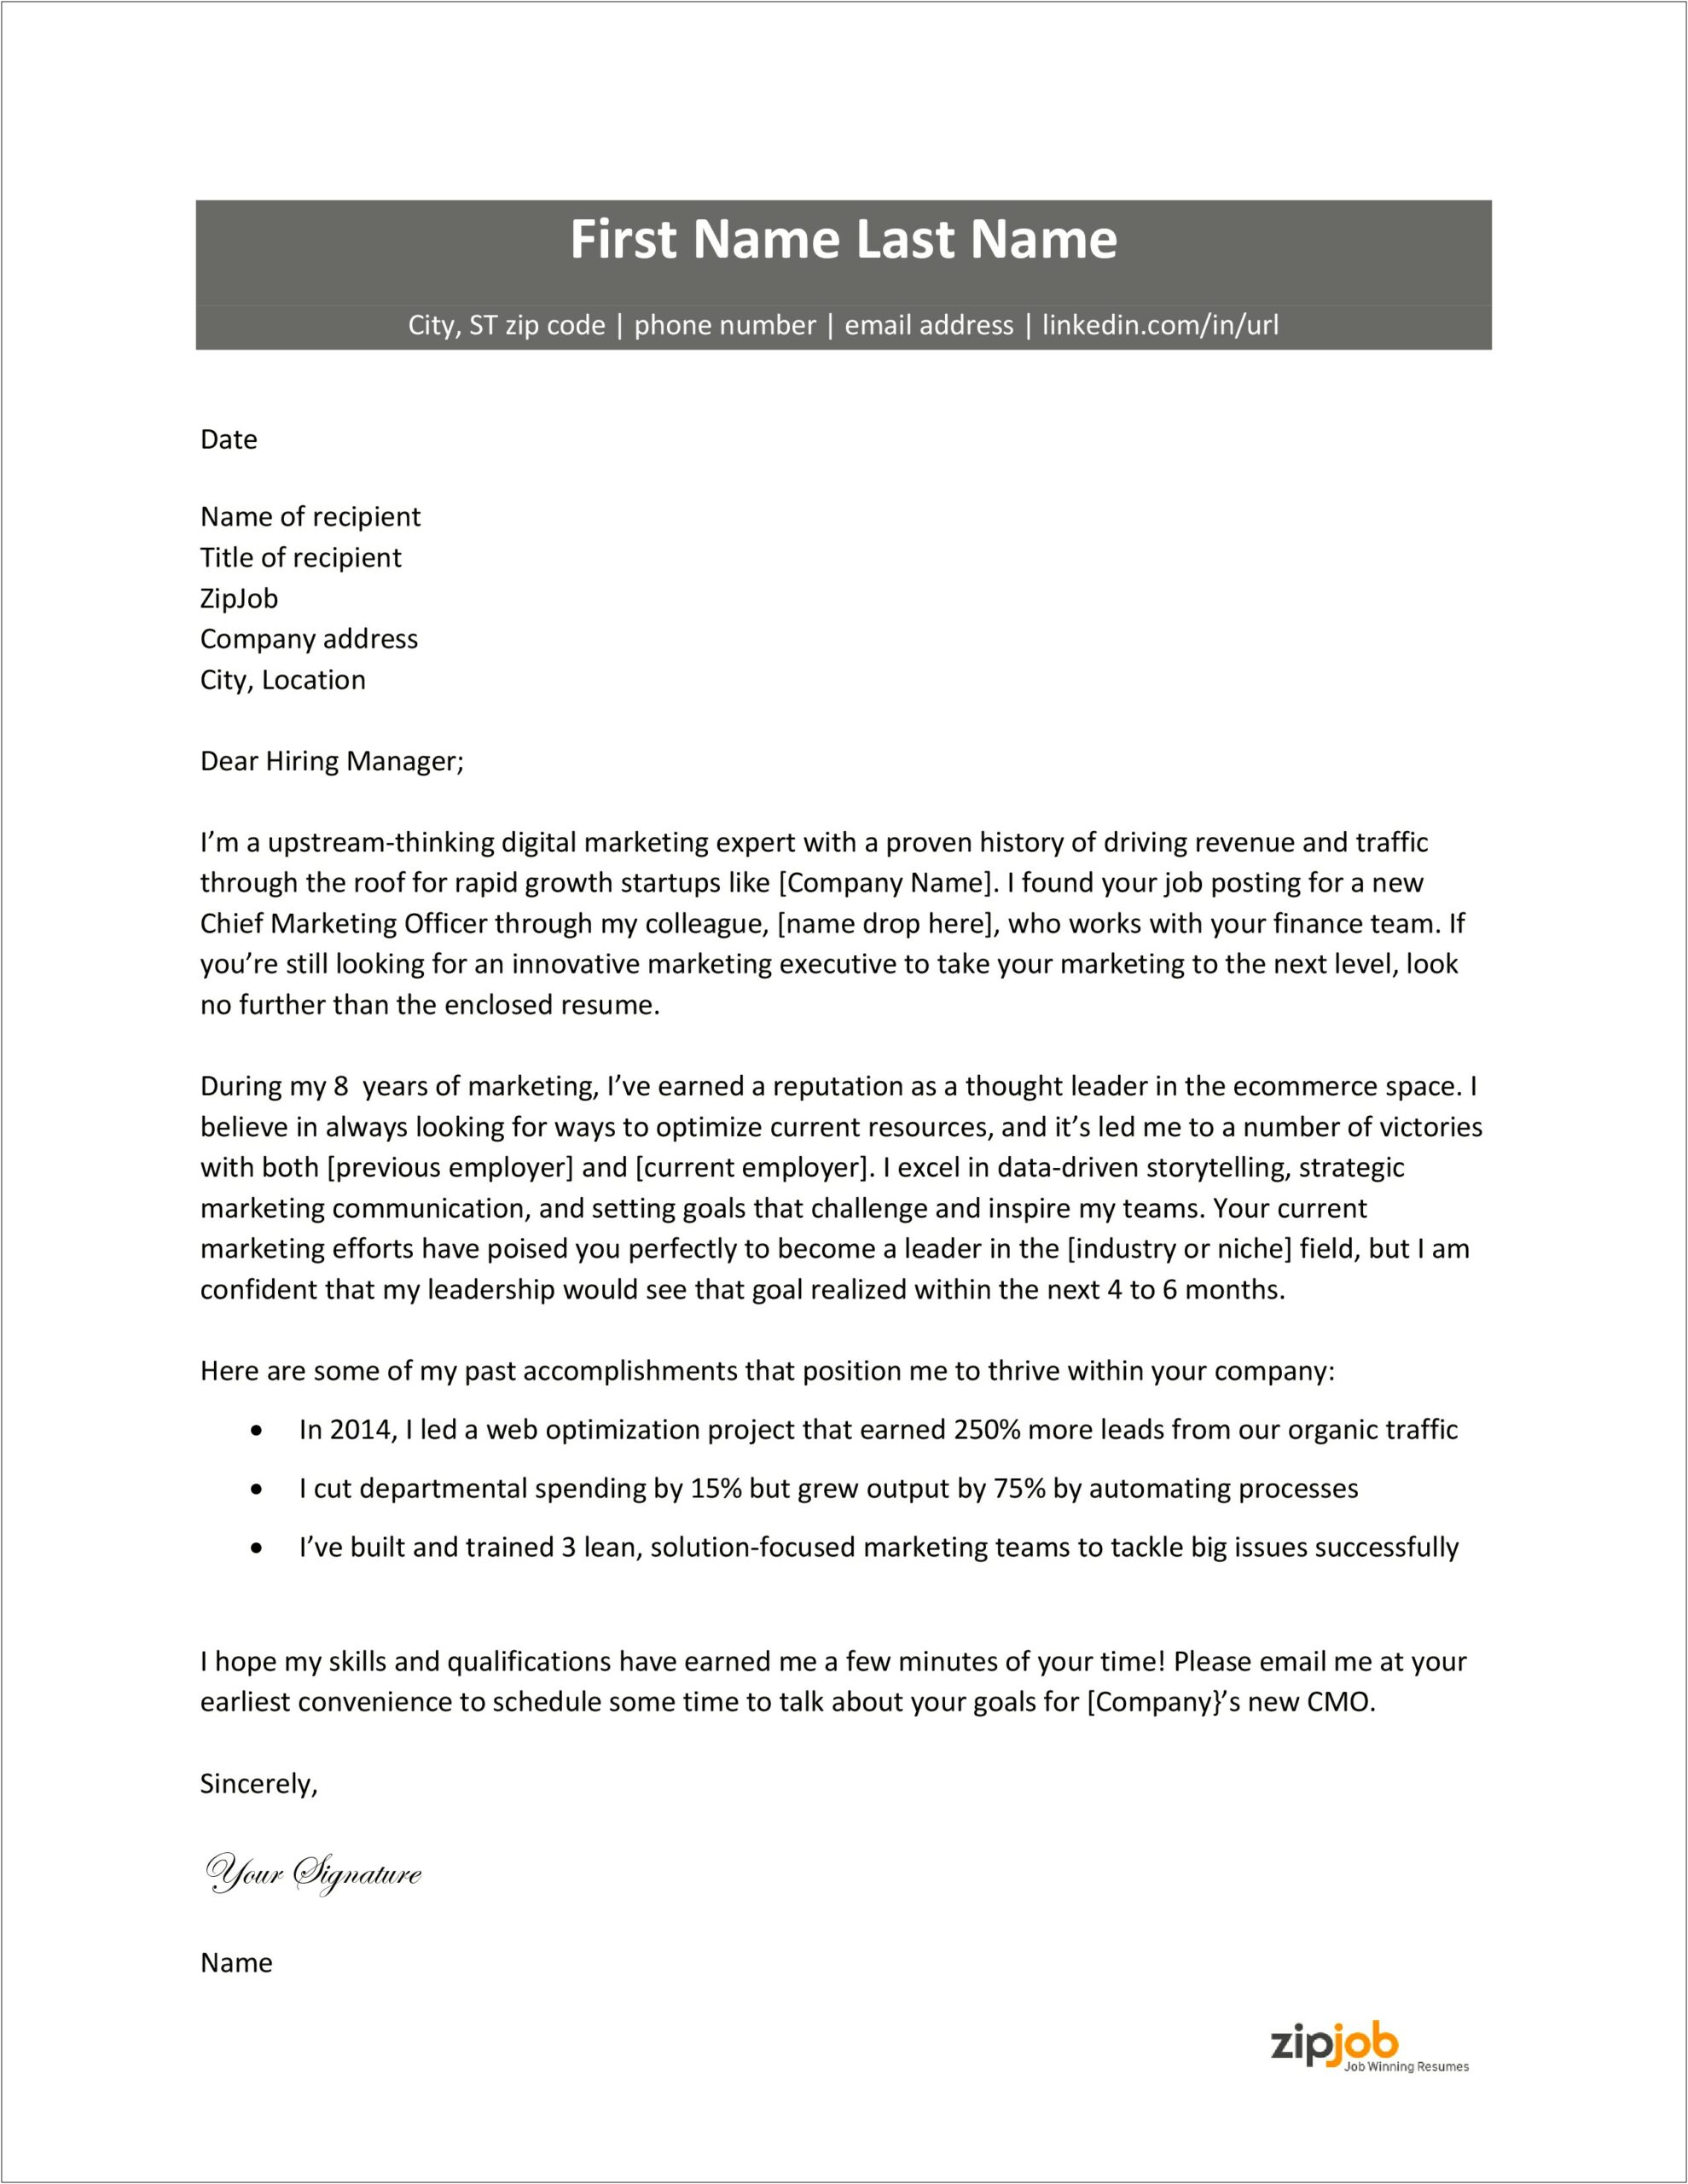 Resume Objective Cover Letter Sample